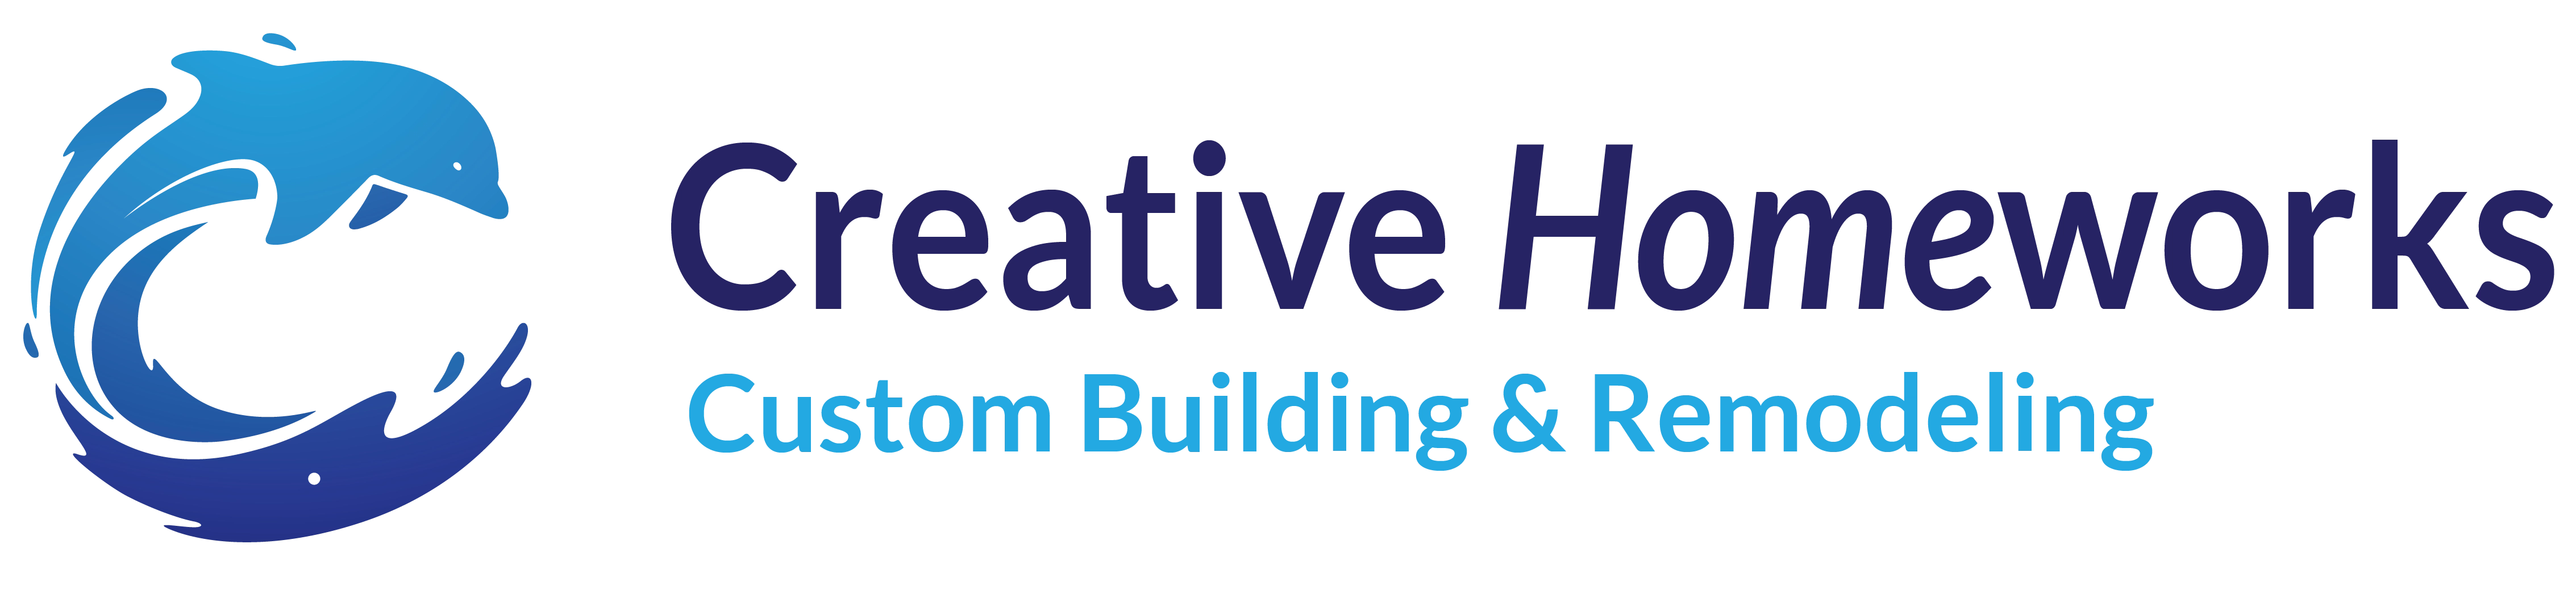 Creative Homeworks Custom Building & Remodeling Logo